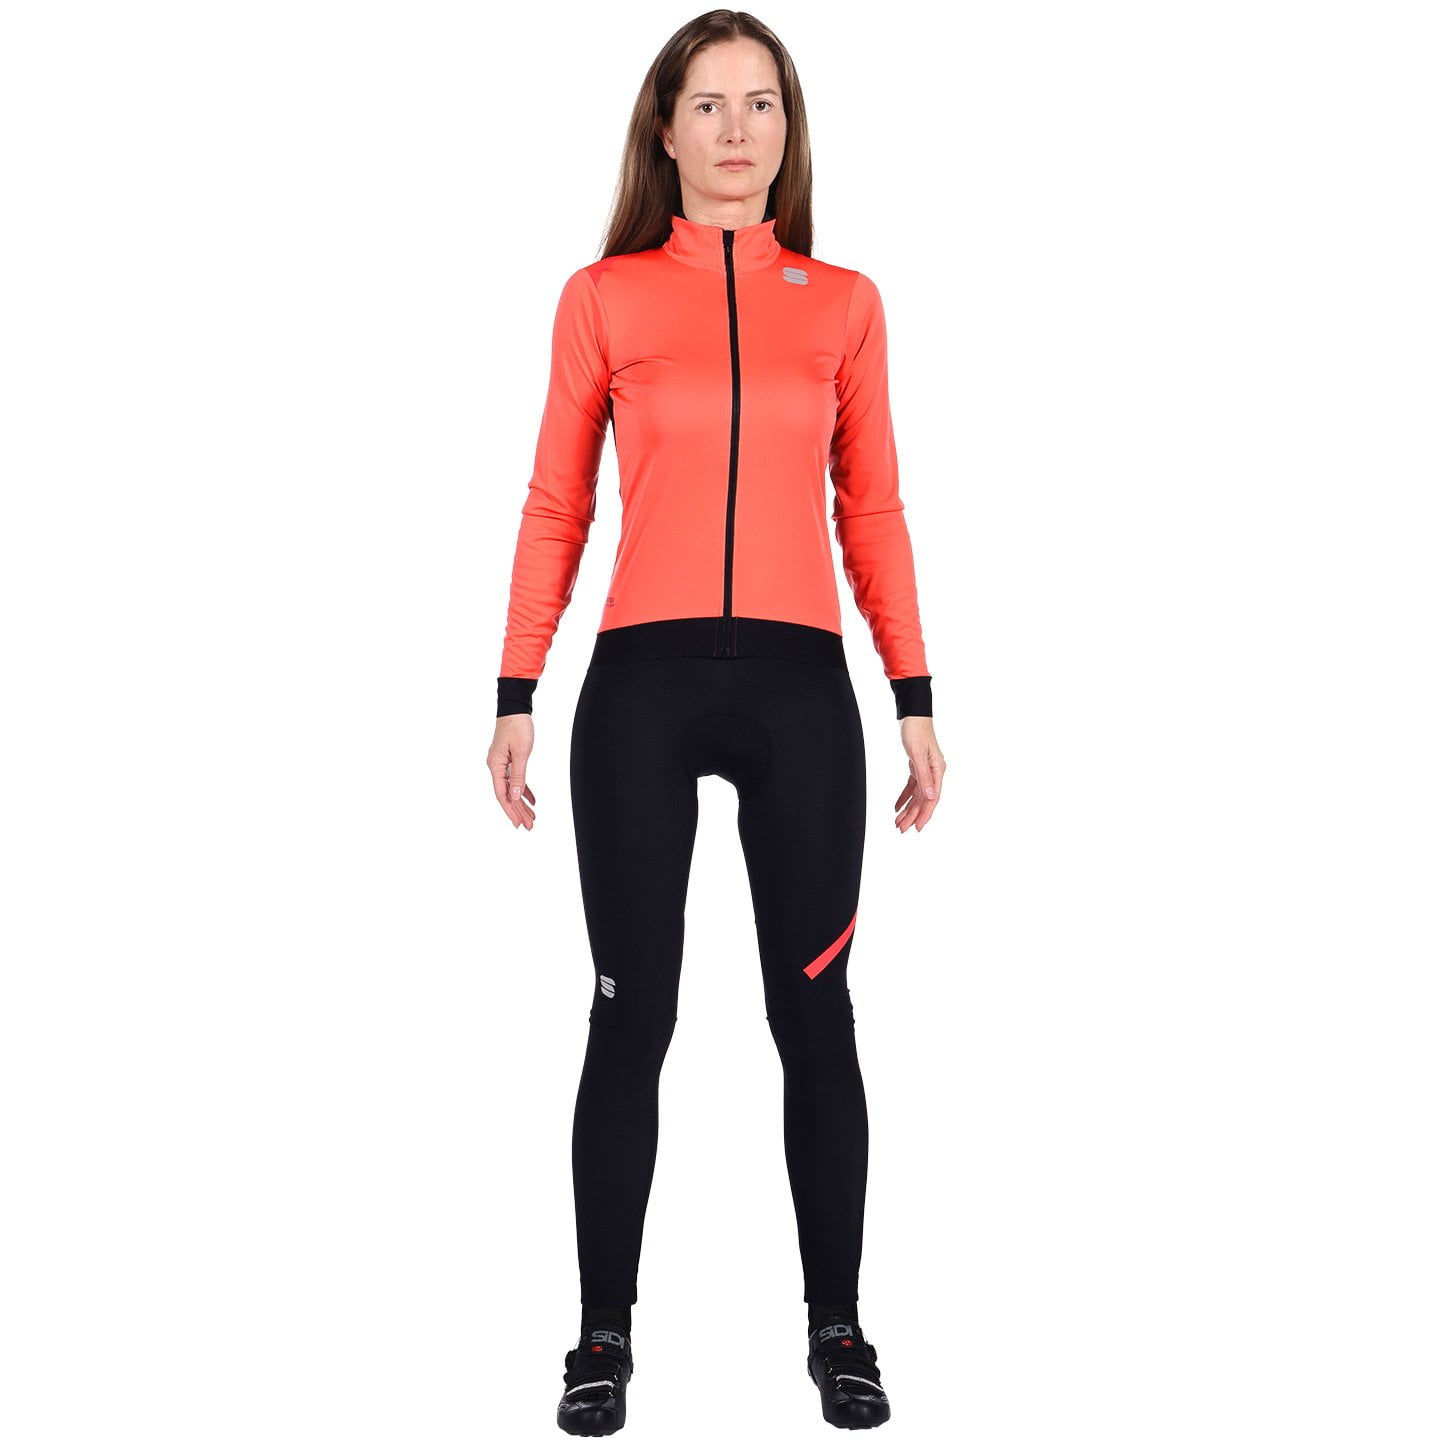 SPORTFUL Fiandre Medium Women’s Set (winter jacket + cycling tights) Women’s Set (2 pieces)